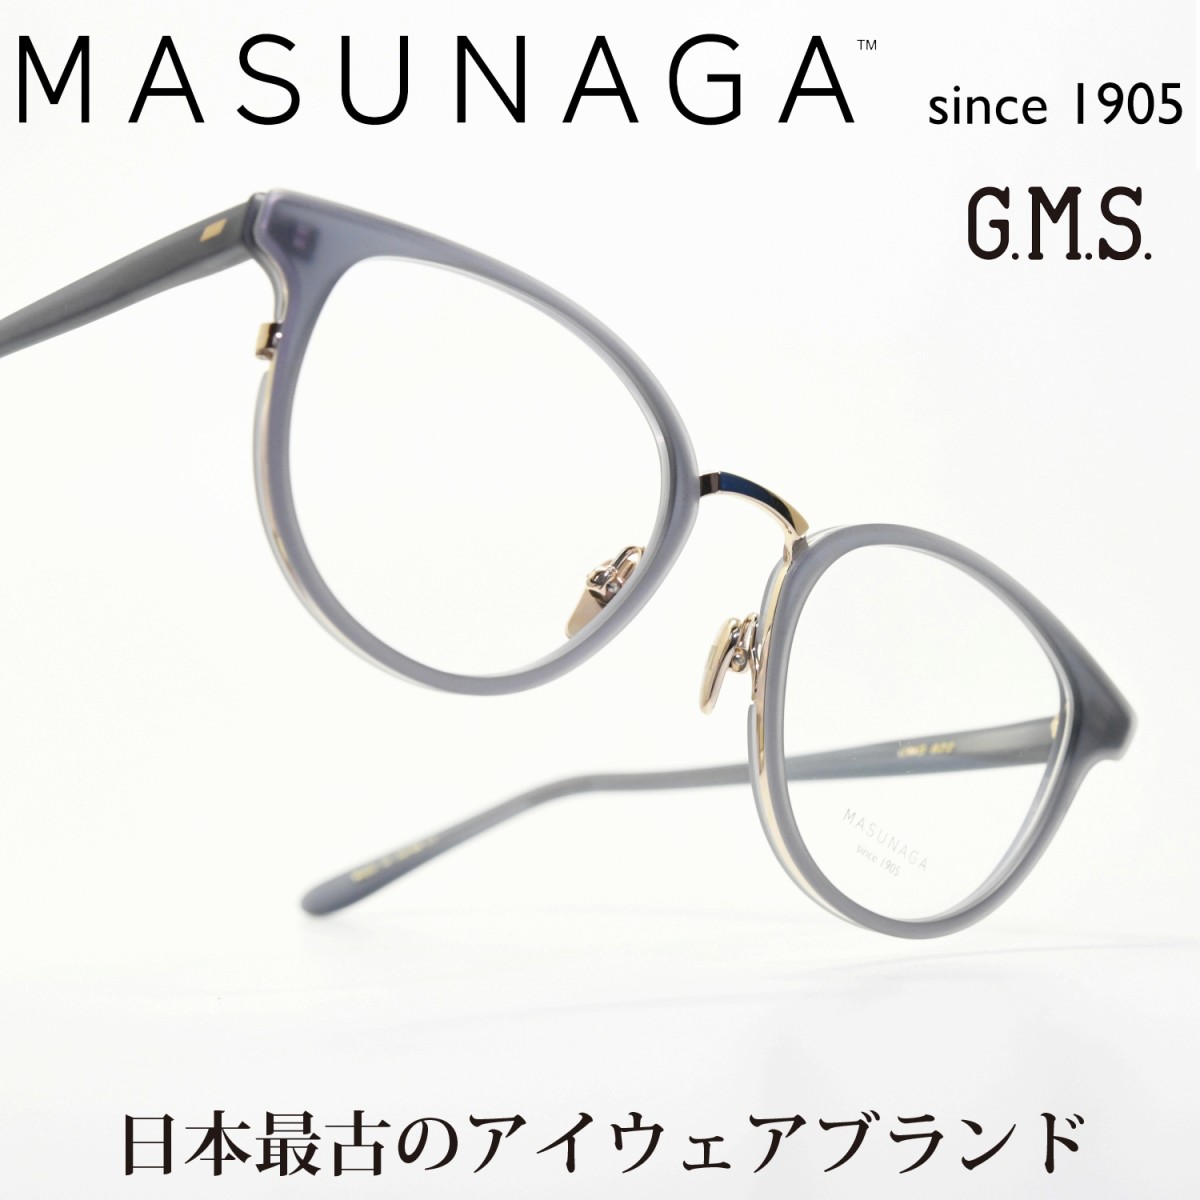 増永眼鏡 MASUNAGA GMS 822 col-B1 GRY-GP